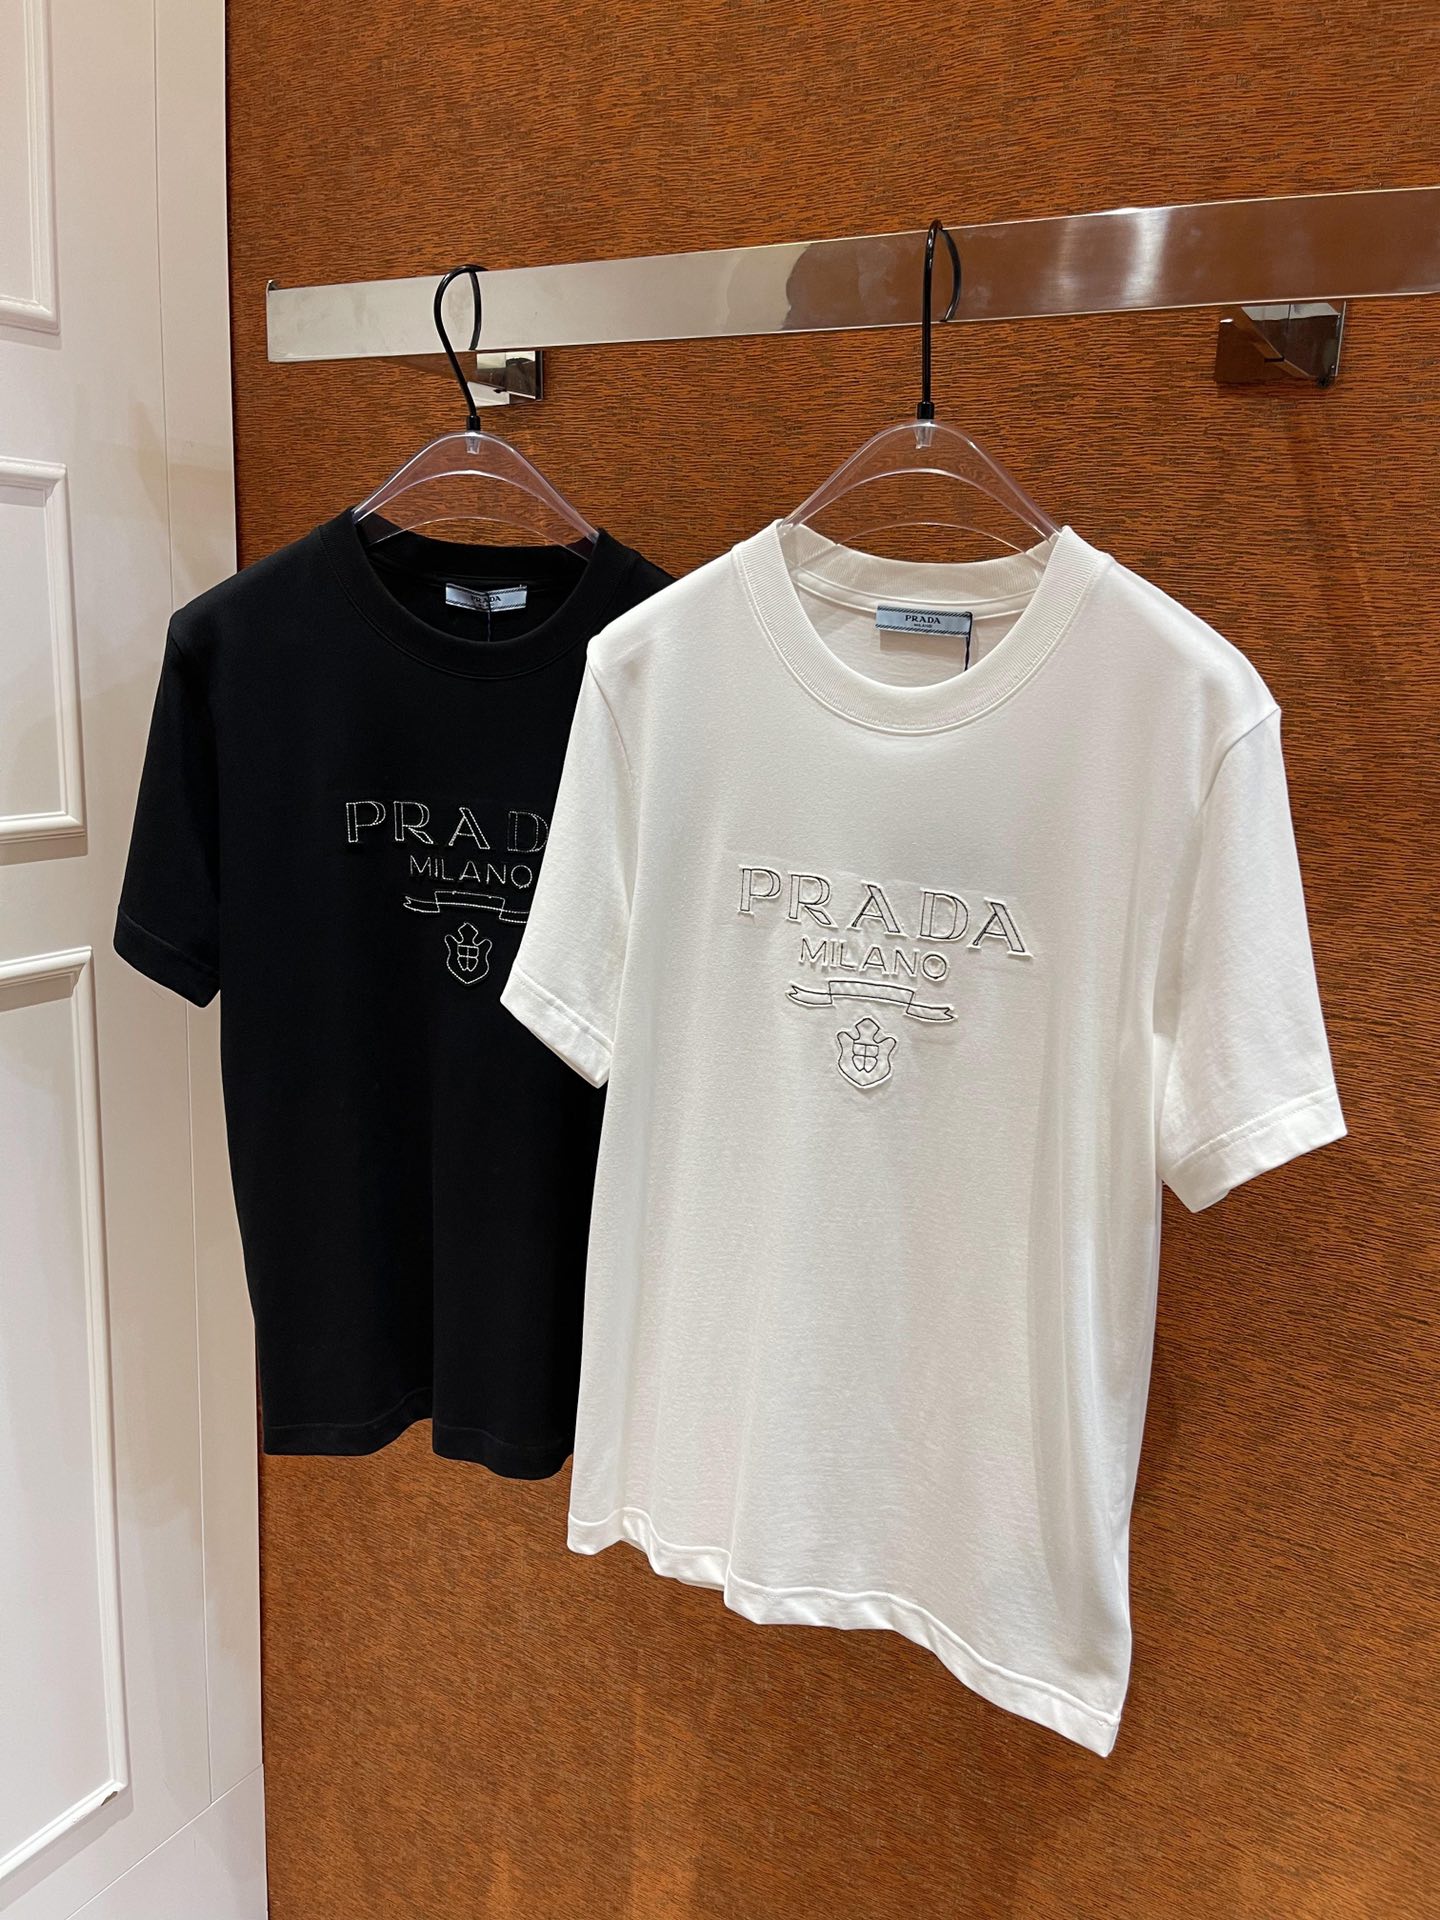 Prada Clothing T-Shirt Black White Unisex Combed Cotton Summer Collection Short Sleeve